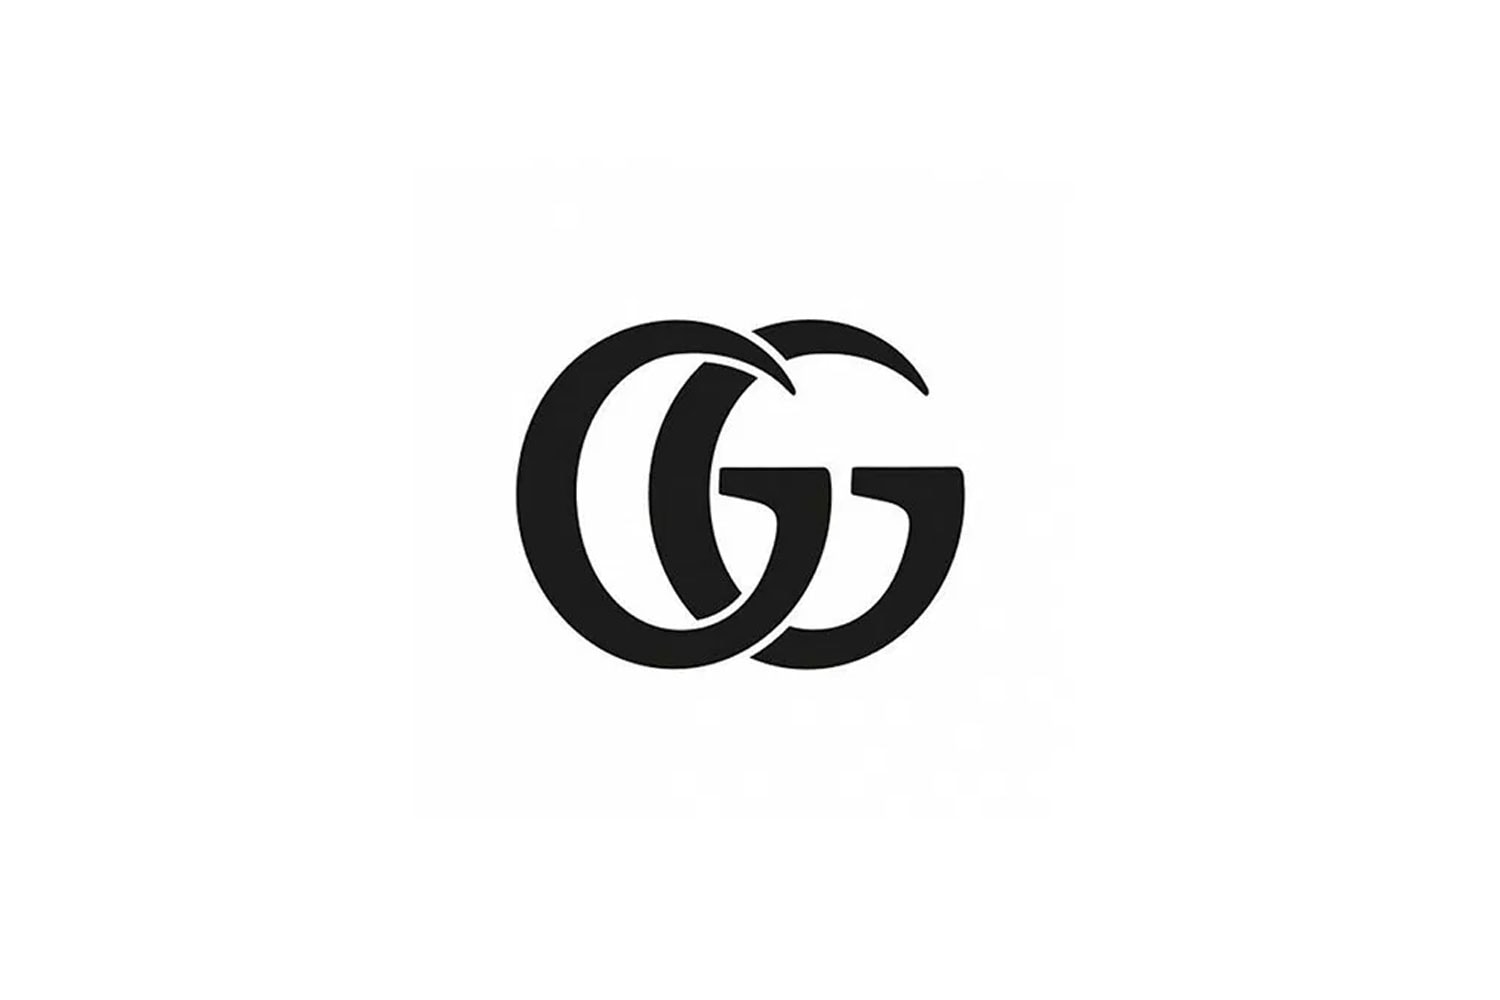 gucci alessandro michele new gg fashion brand logo kering 